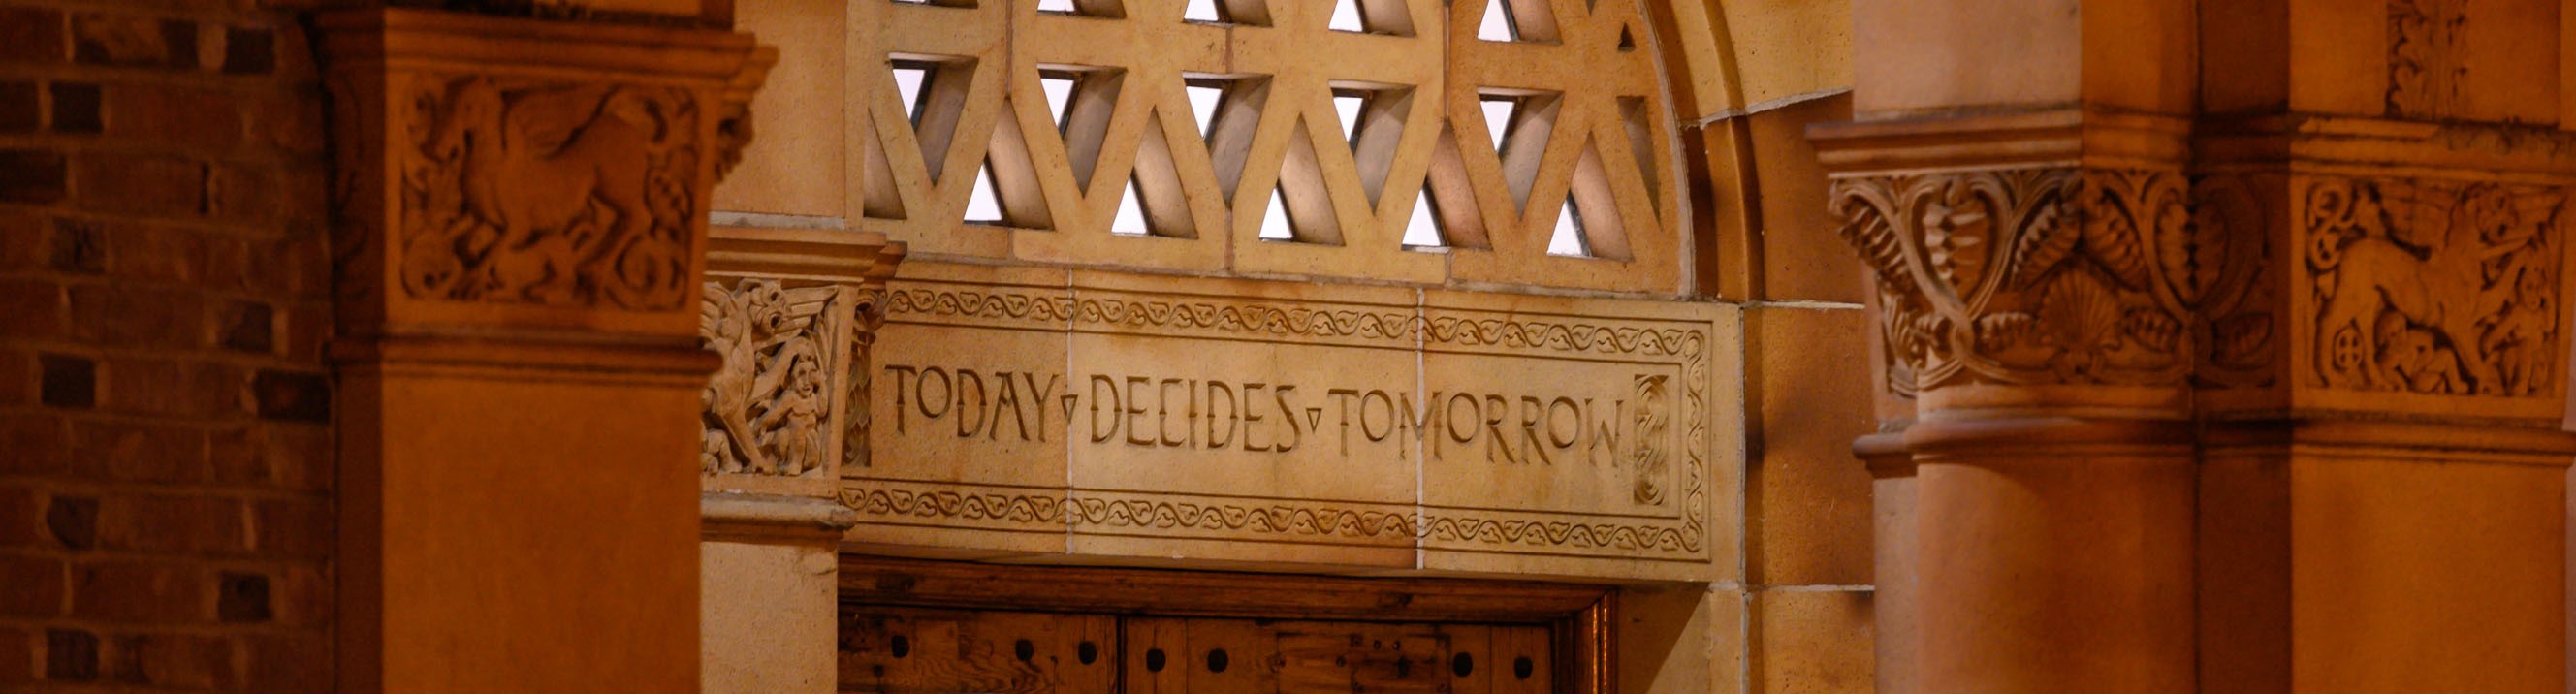 "Today decides tomorrow"